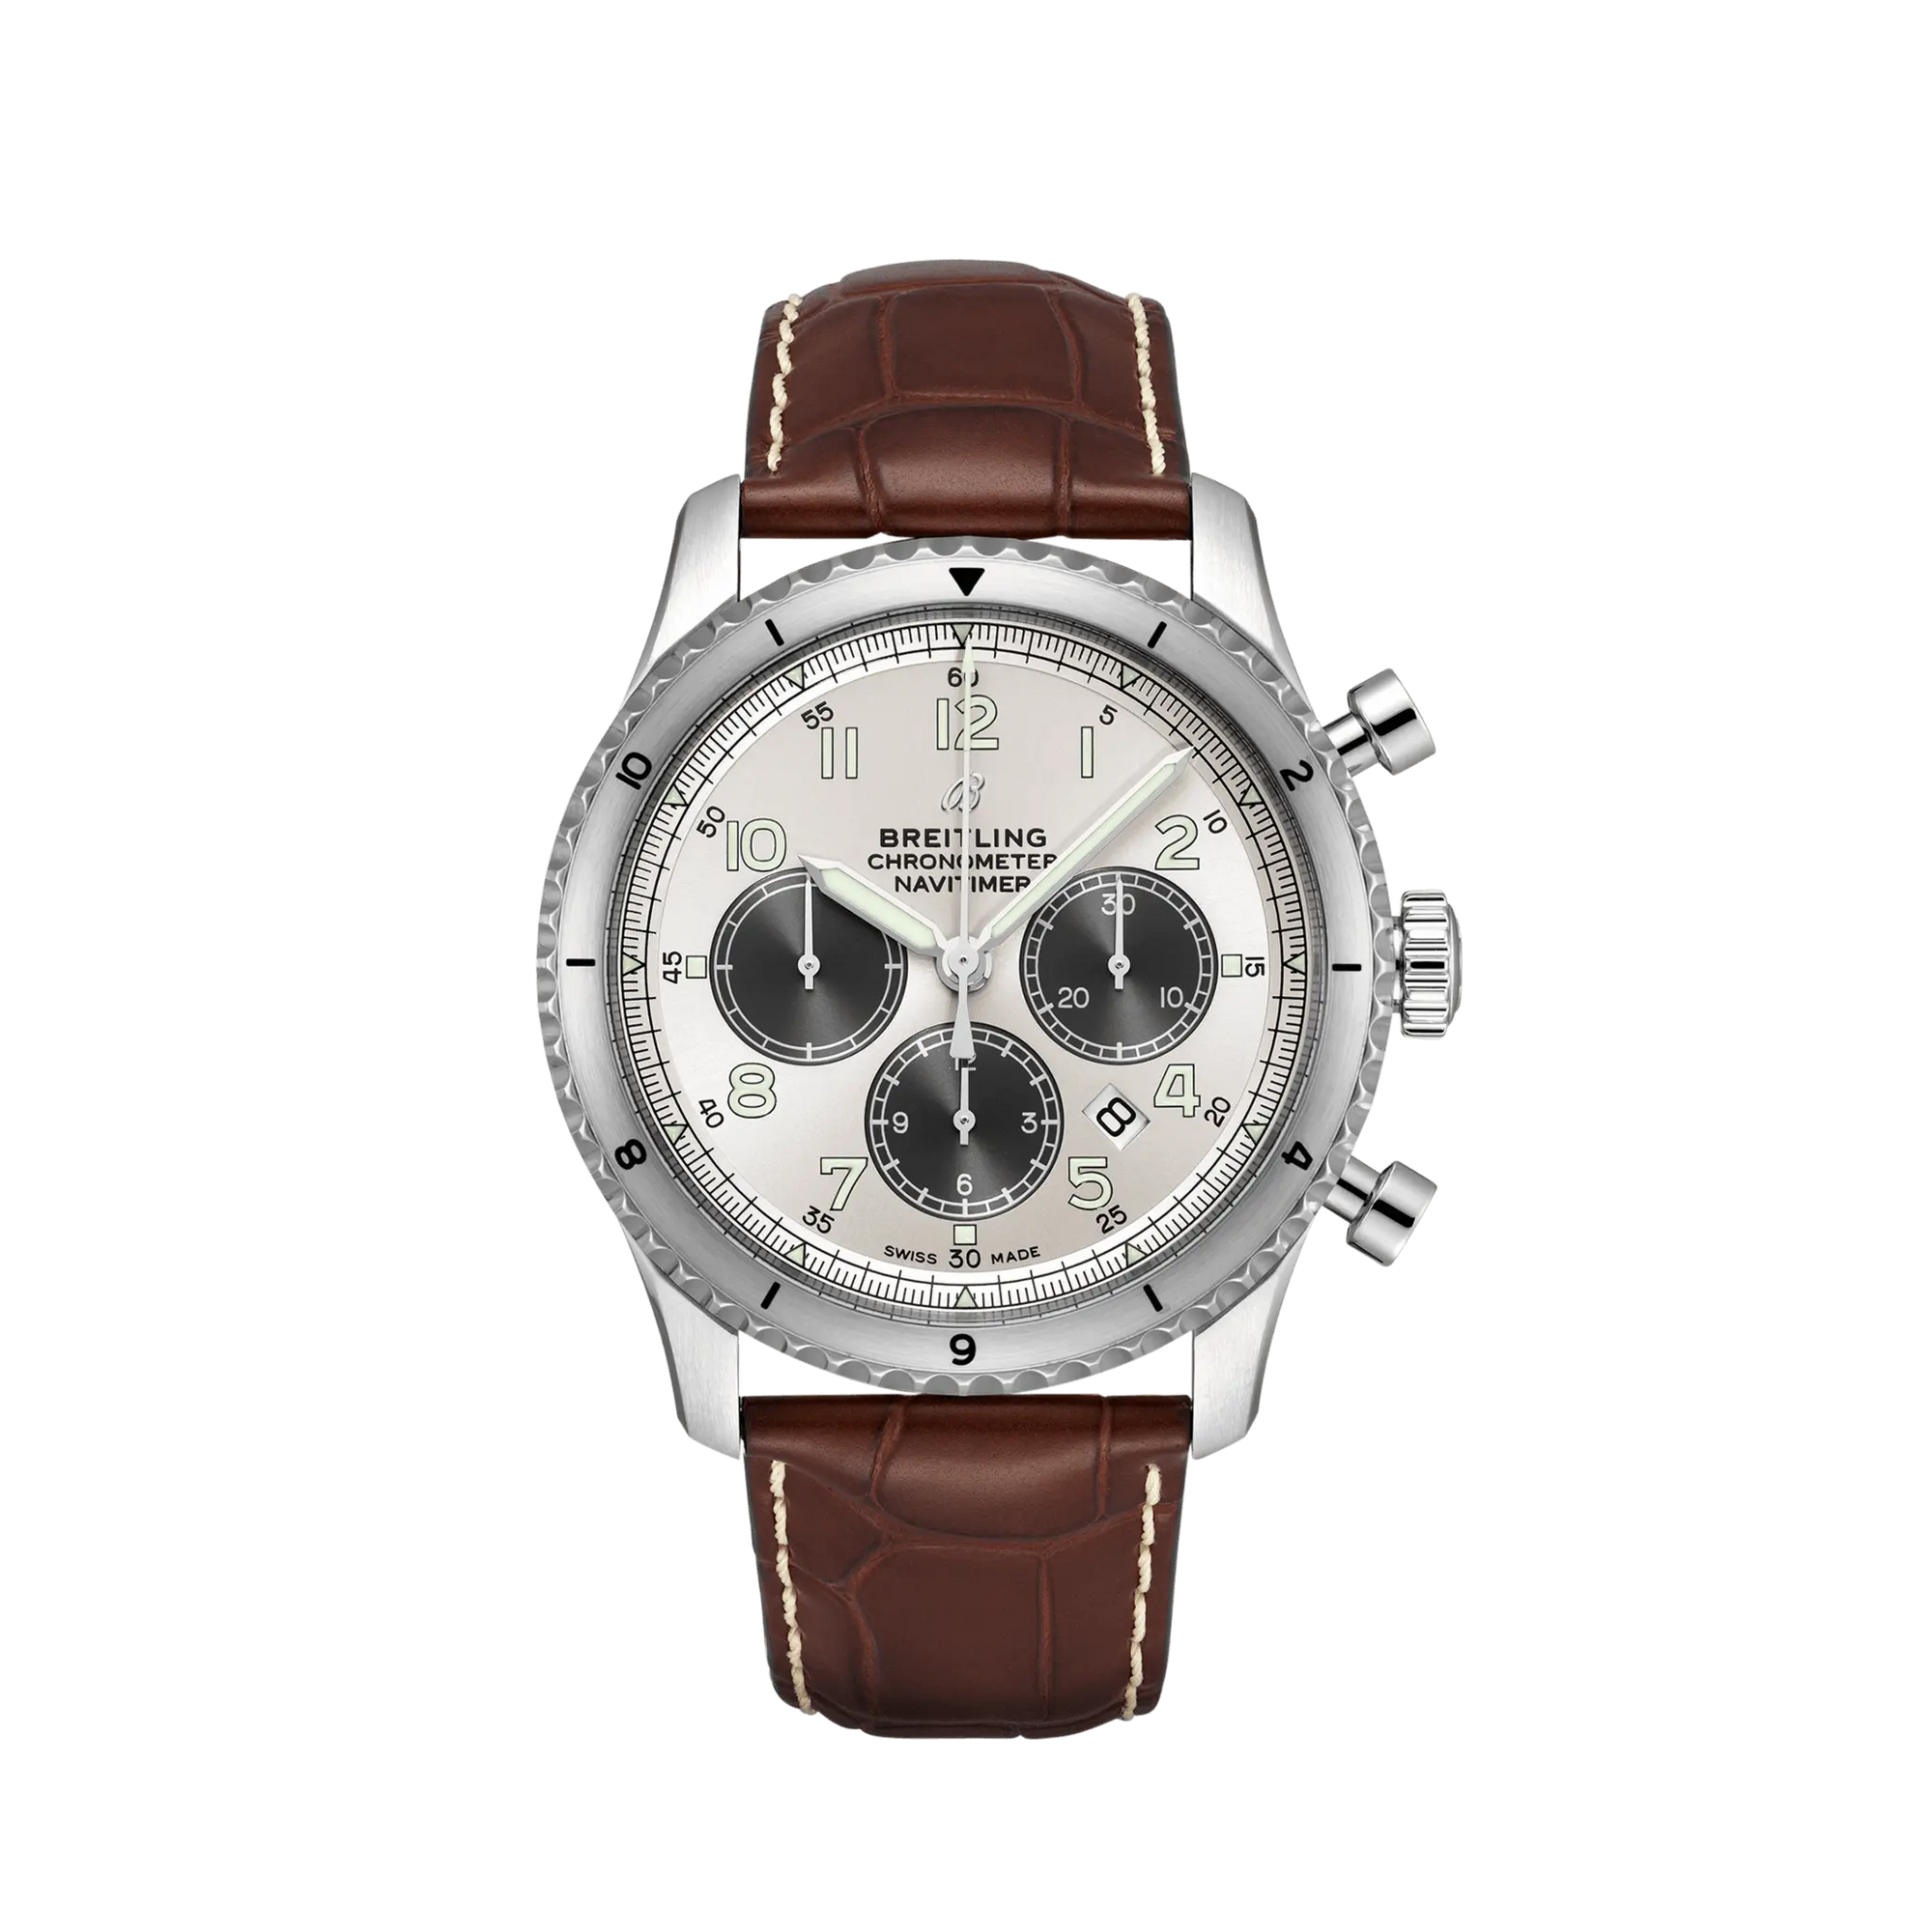 Wrist watch by Breitling NAVITIMER AVIATOR 8 B01